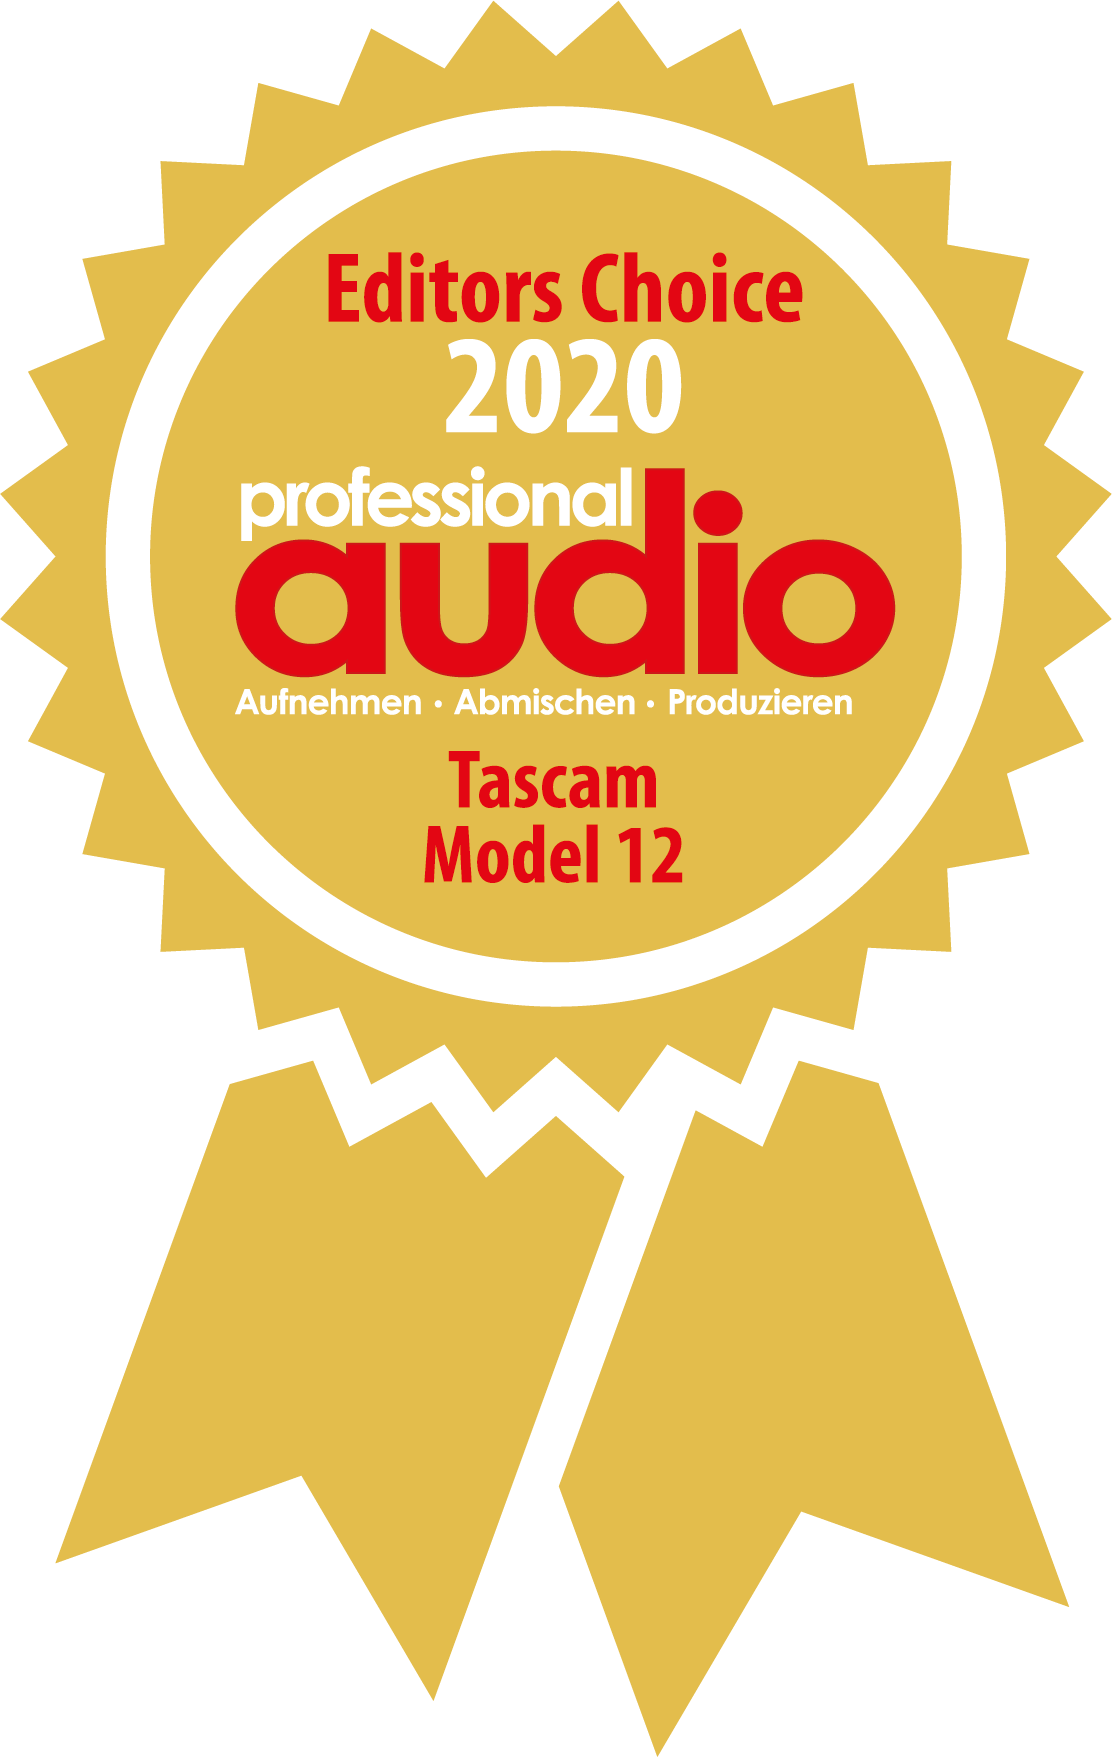 Tascam Model 24 ist Editor?s Choice 2020